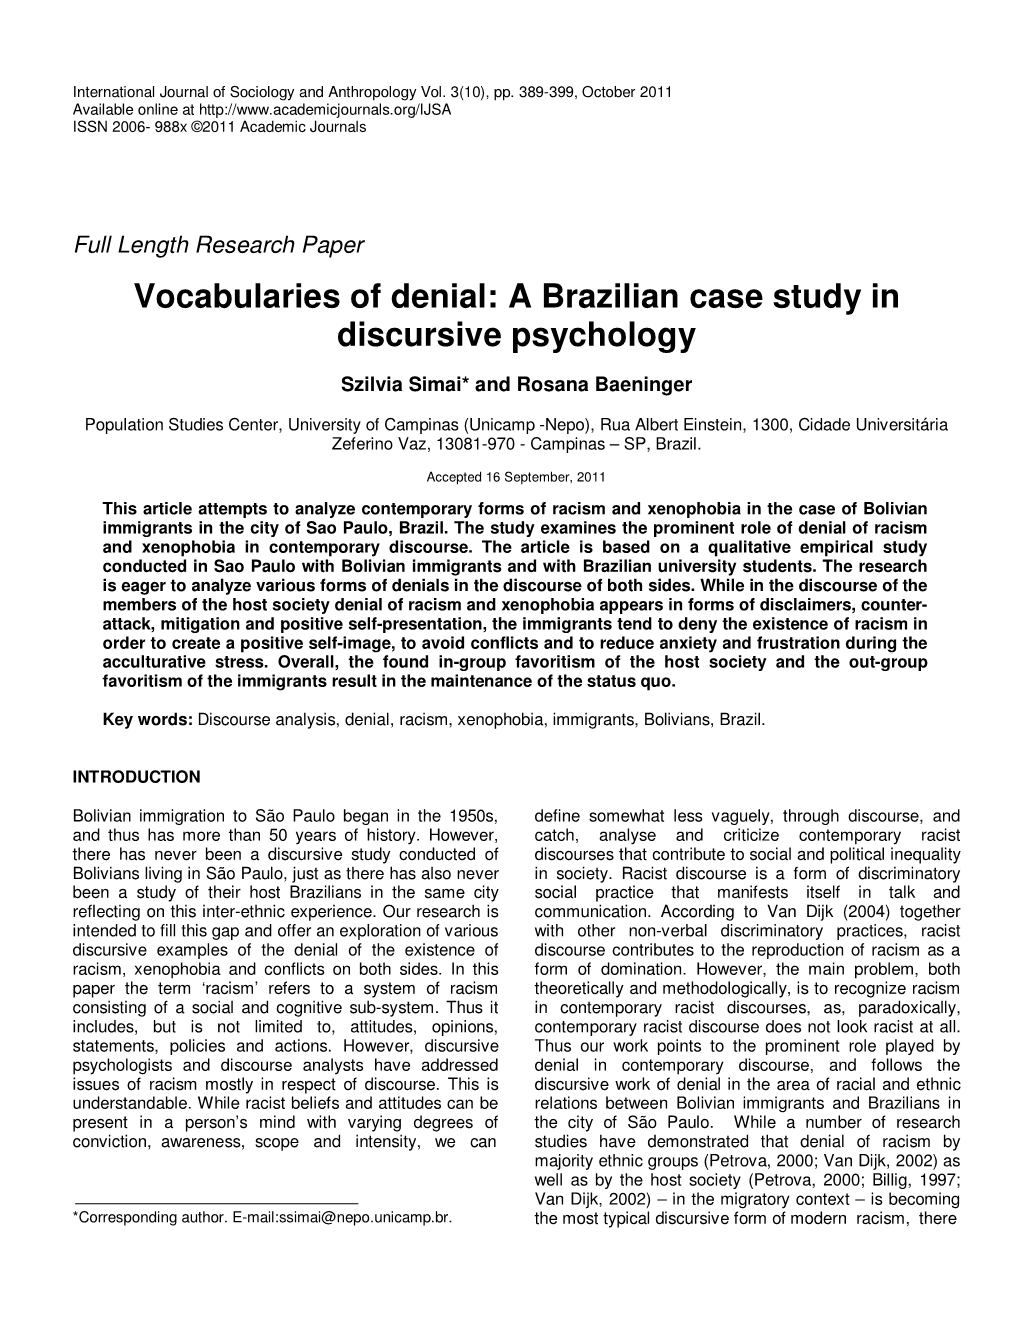 A Brazilian Case Study in Discursive Psychology